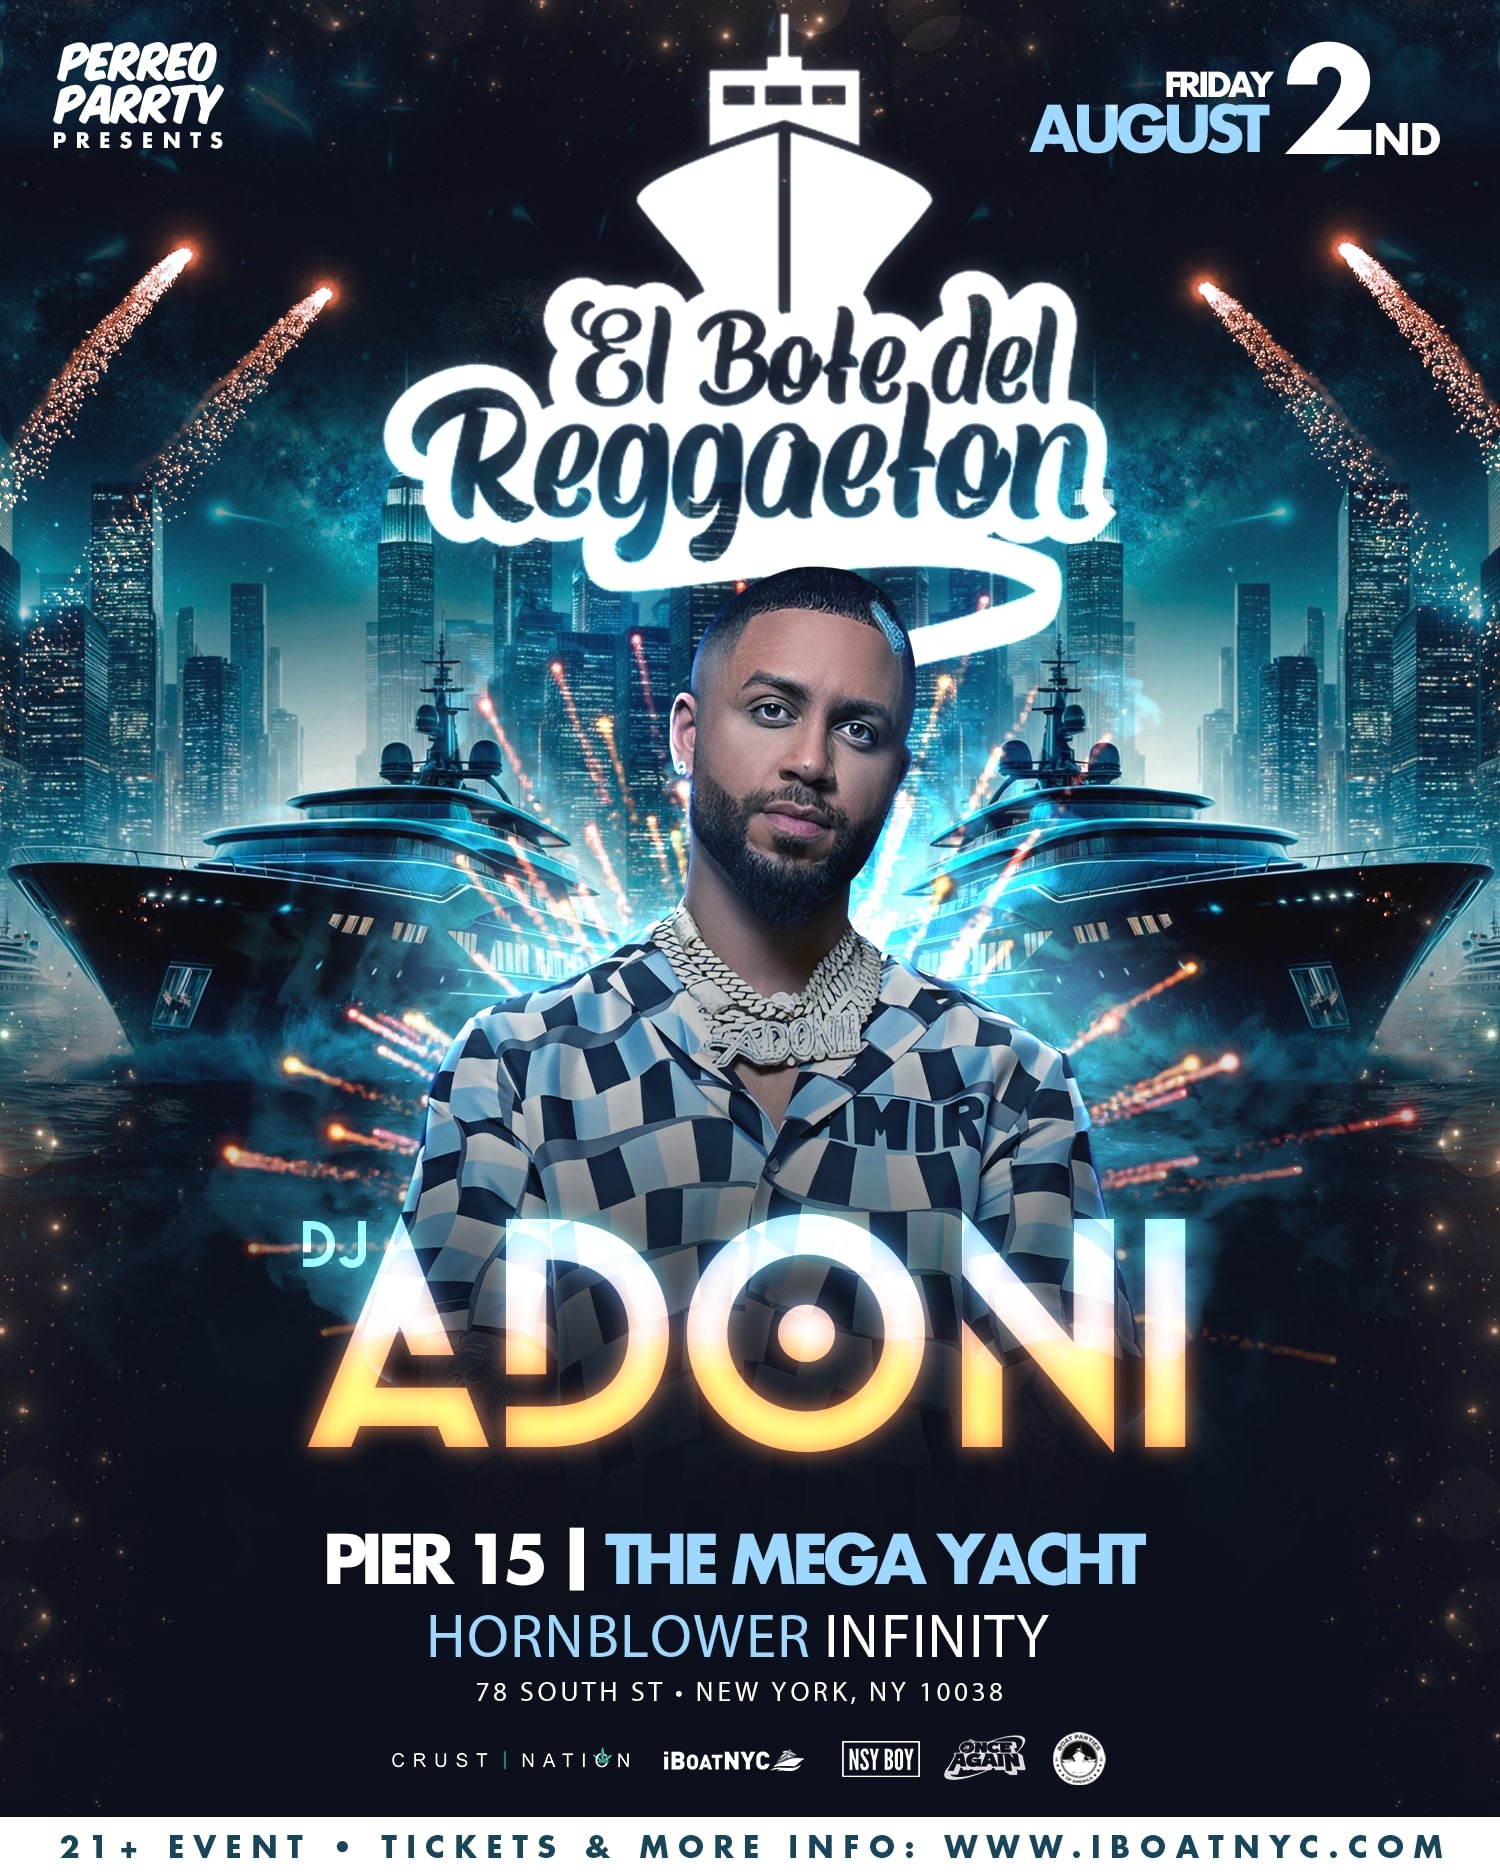 El Bote del Reggaeton: DJ ADONI Yacht Cruise Party